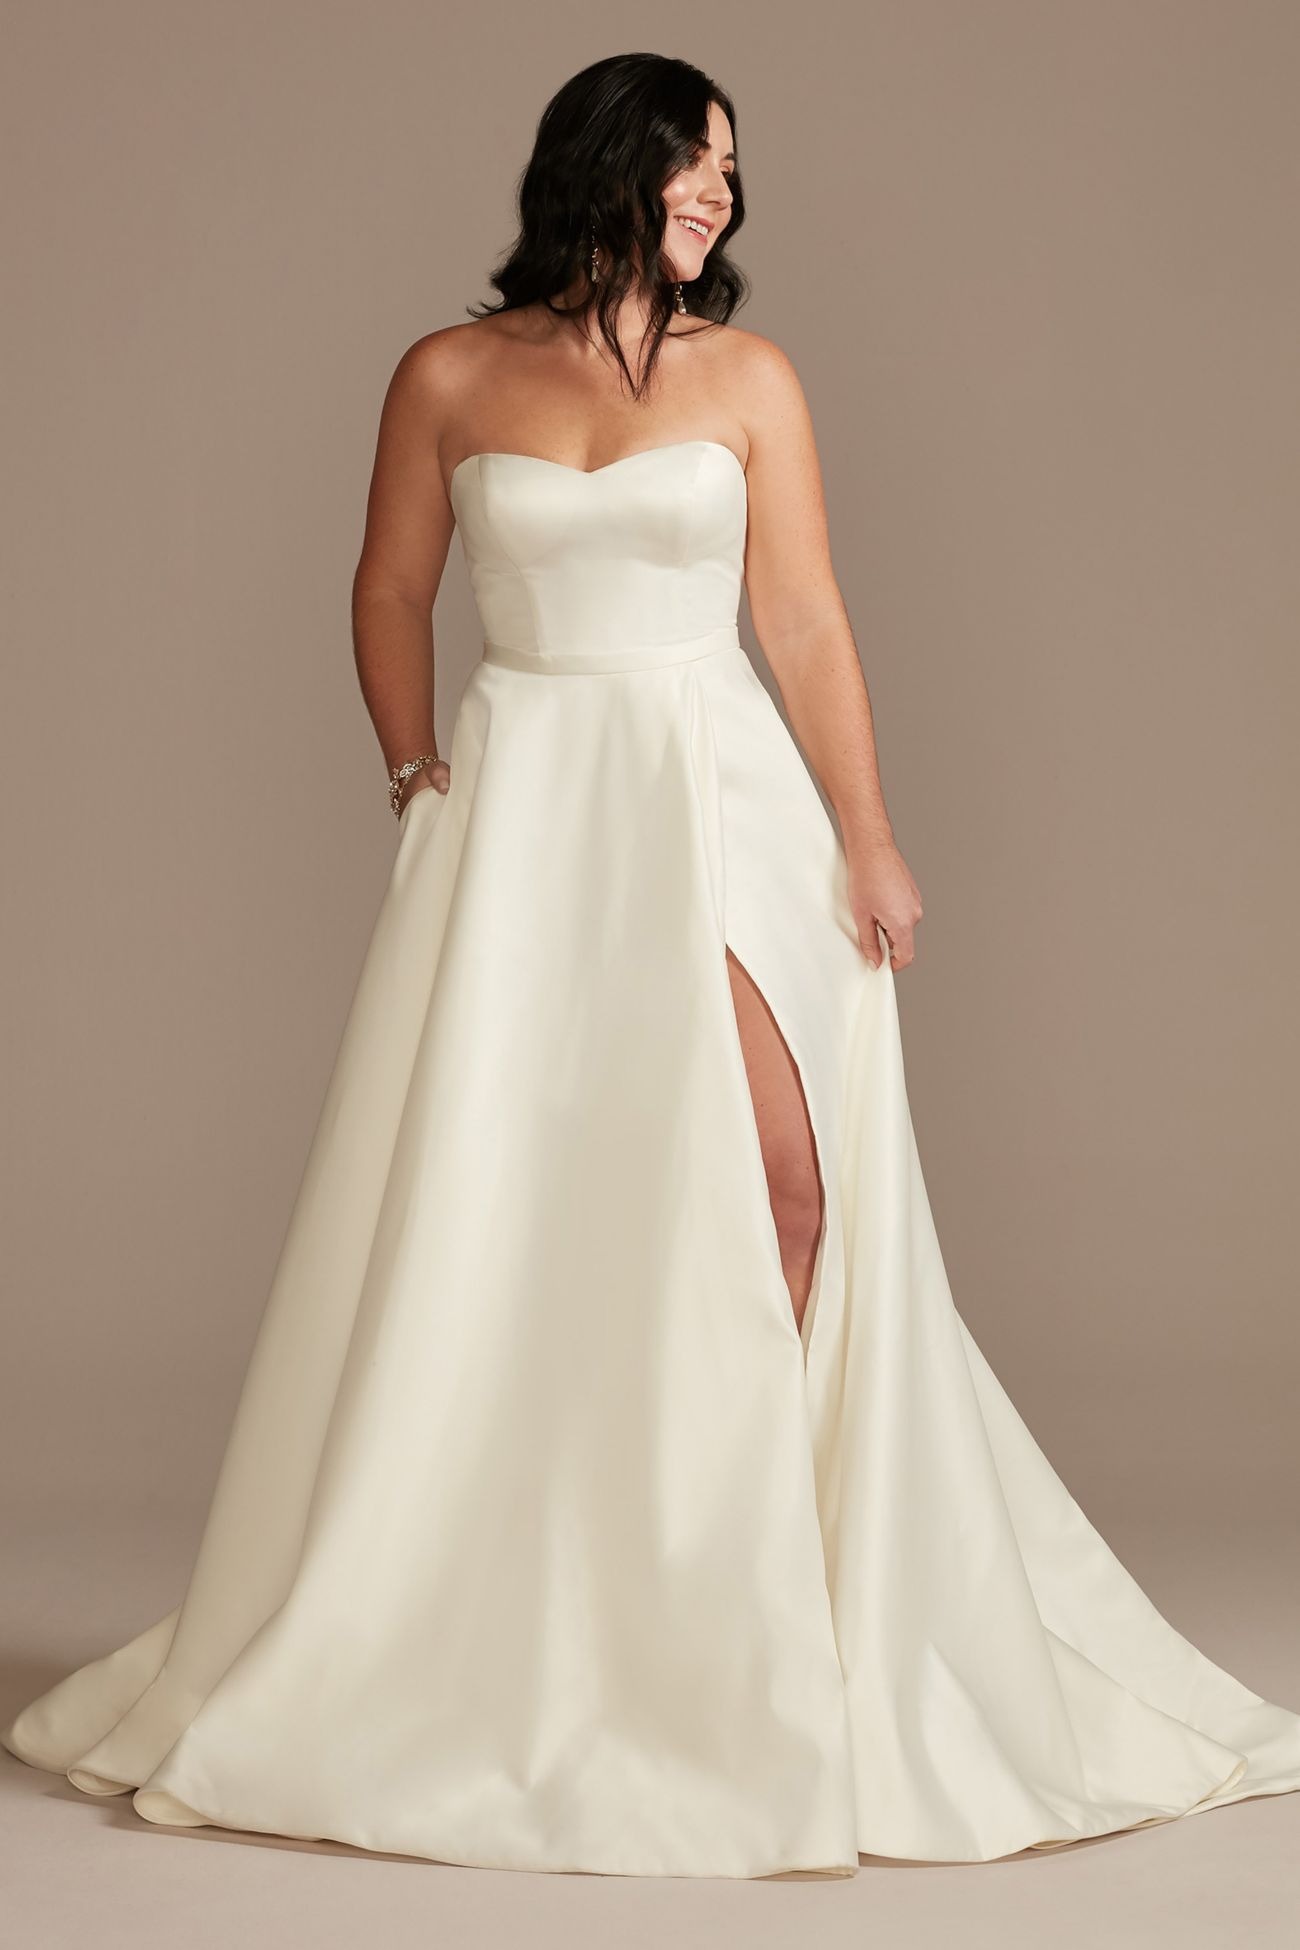 strapless floor length ballgown wedding dresses from David's Bridal online